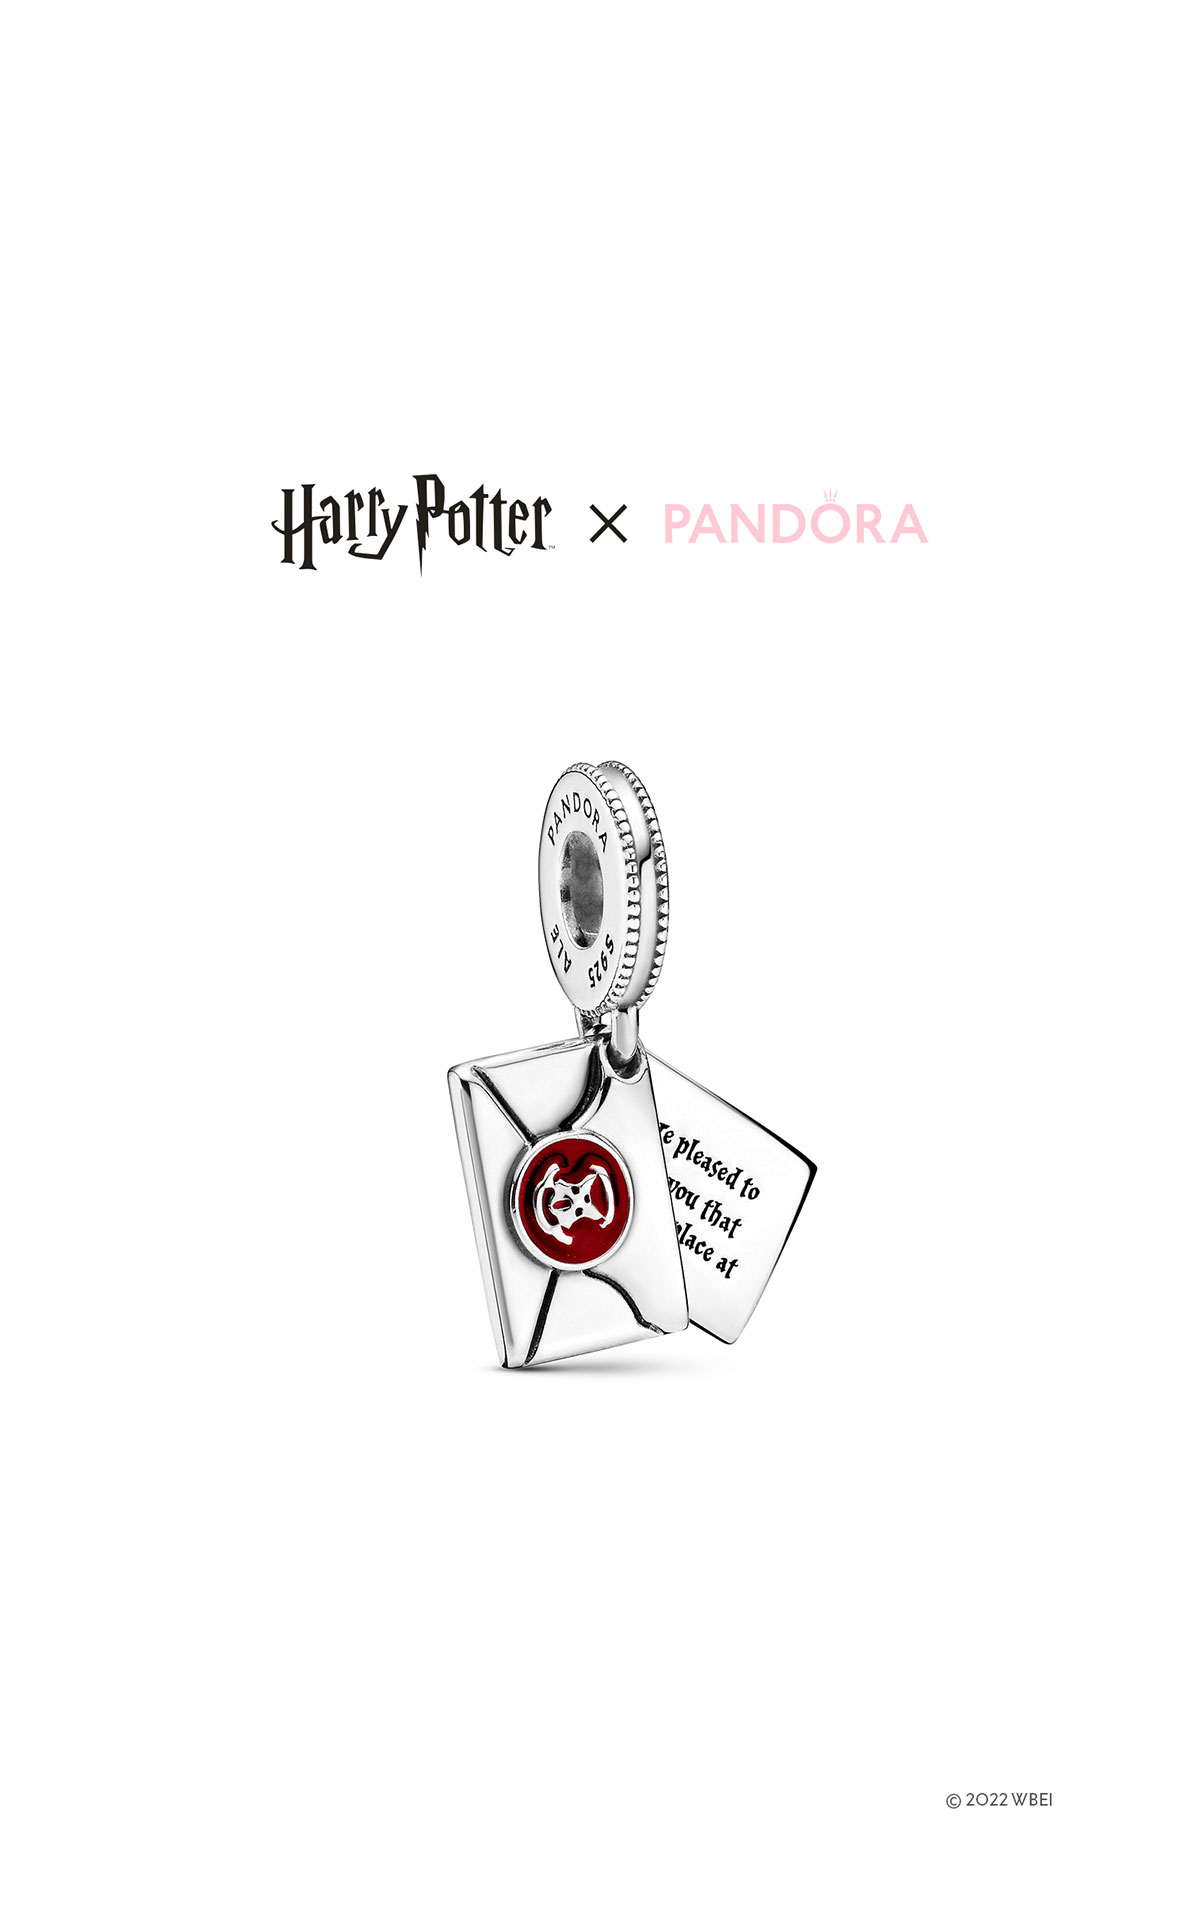 Pandora Harry Potter letter from Bicester Village